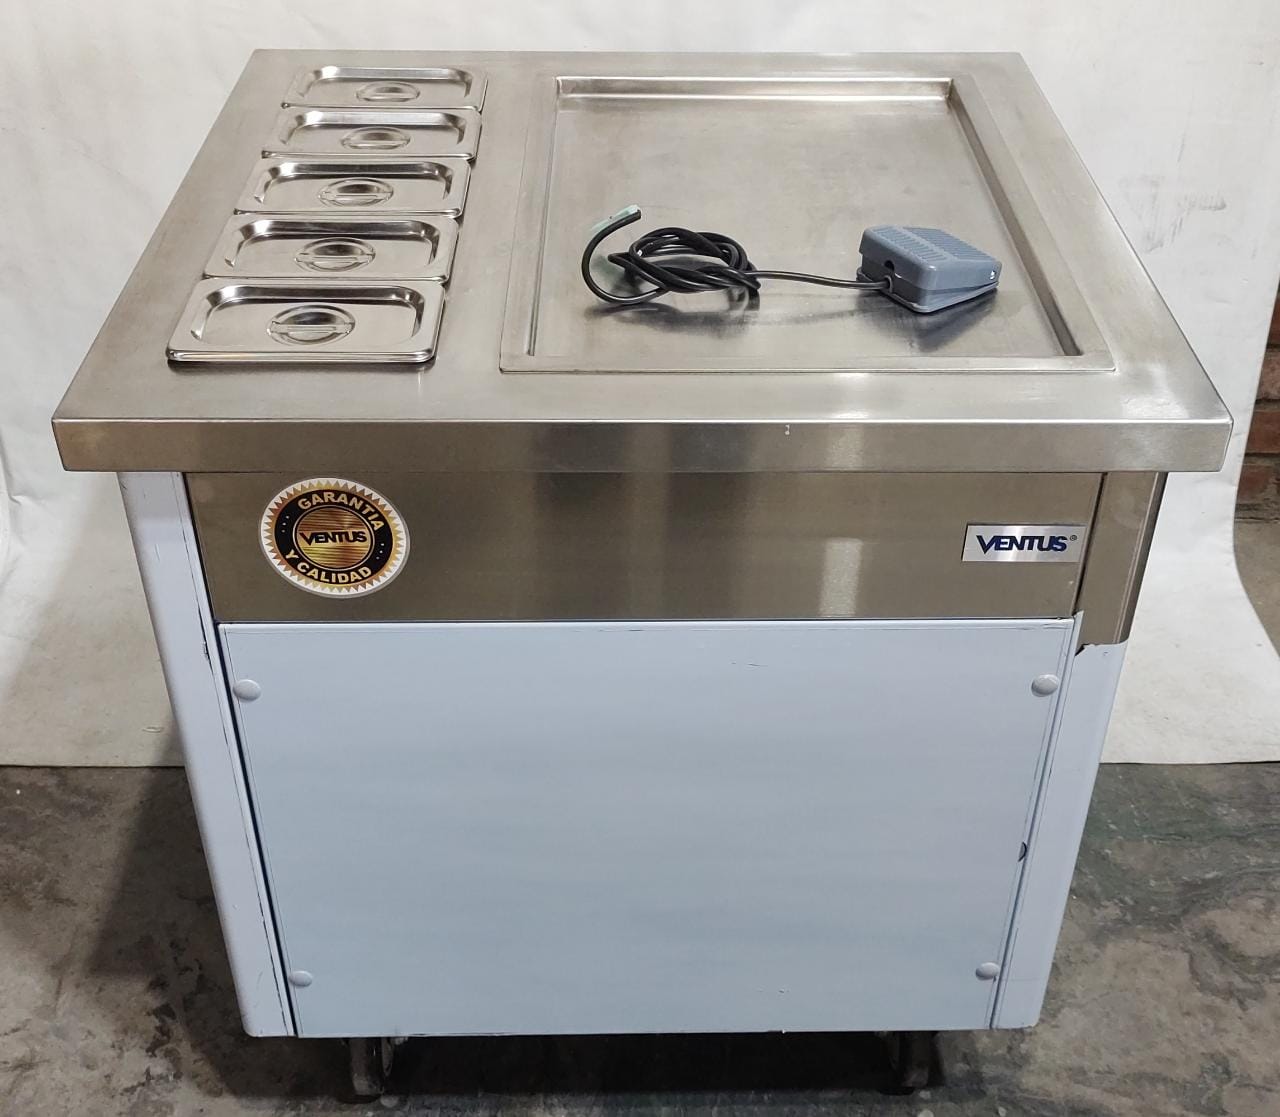 Máquina de helado frito tailandés con depósito ventus [Openbox]